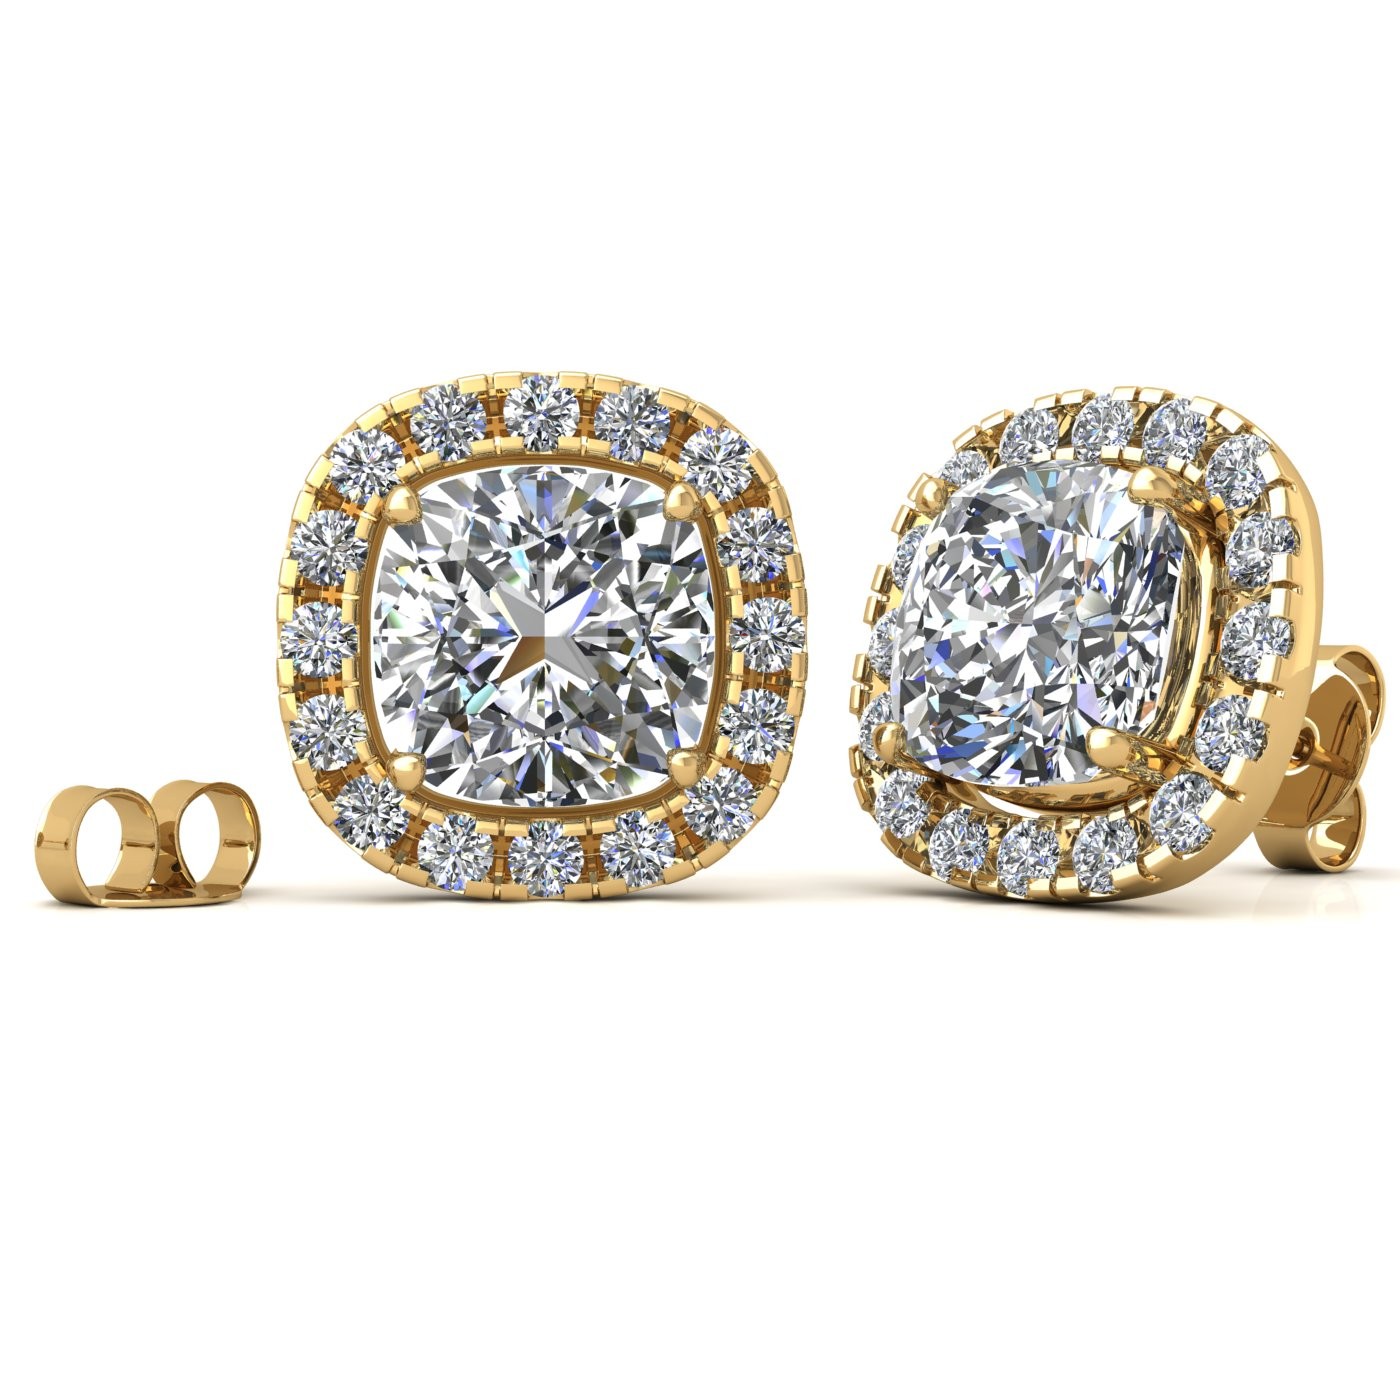 18k yellow gold 0,3 ct each (0,6 tcw) 4 prongs cushion shape diamond earrings with diamond pavÉ set halo Photos & images